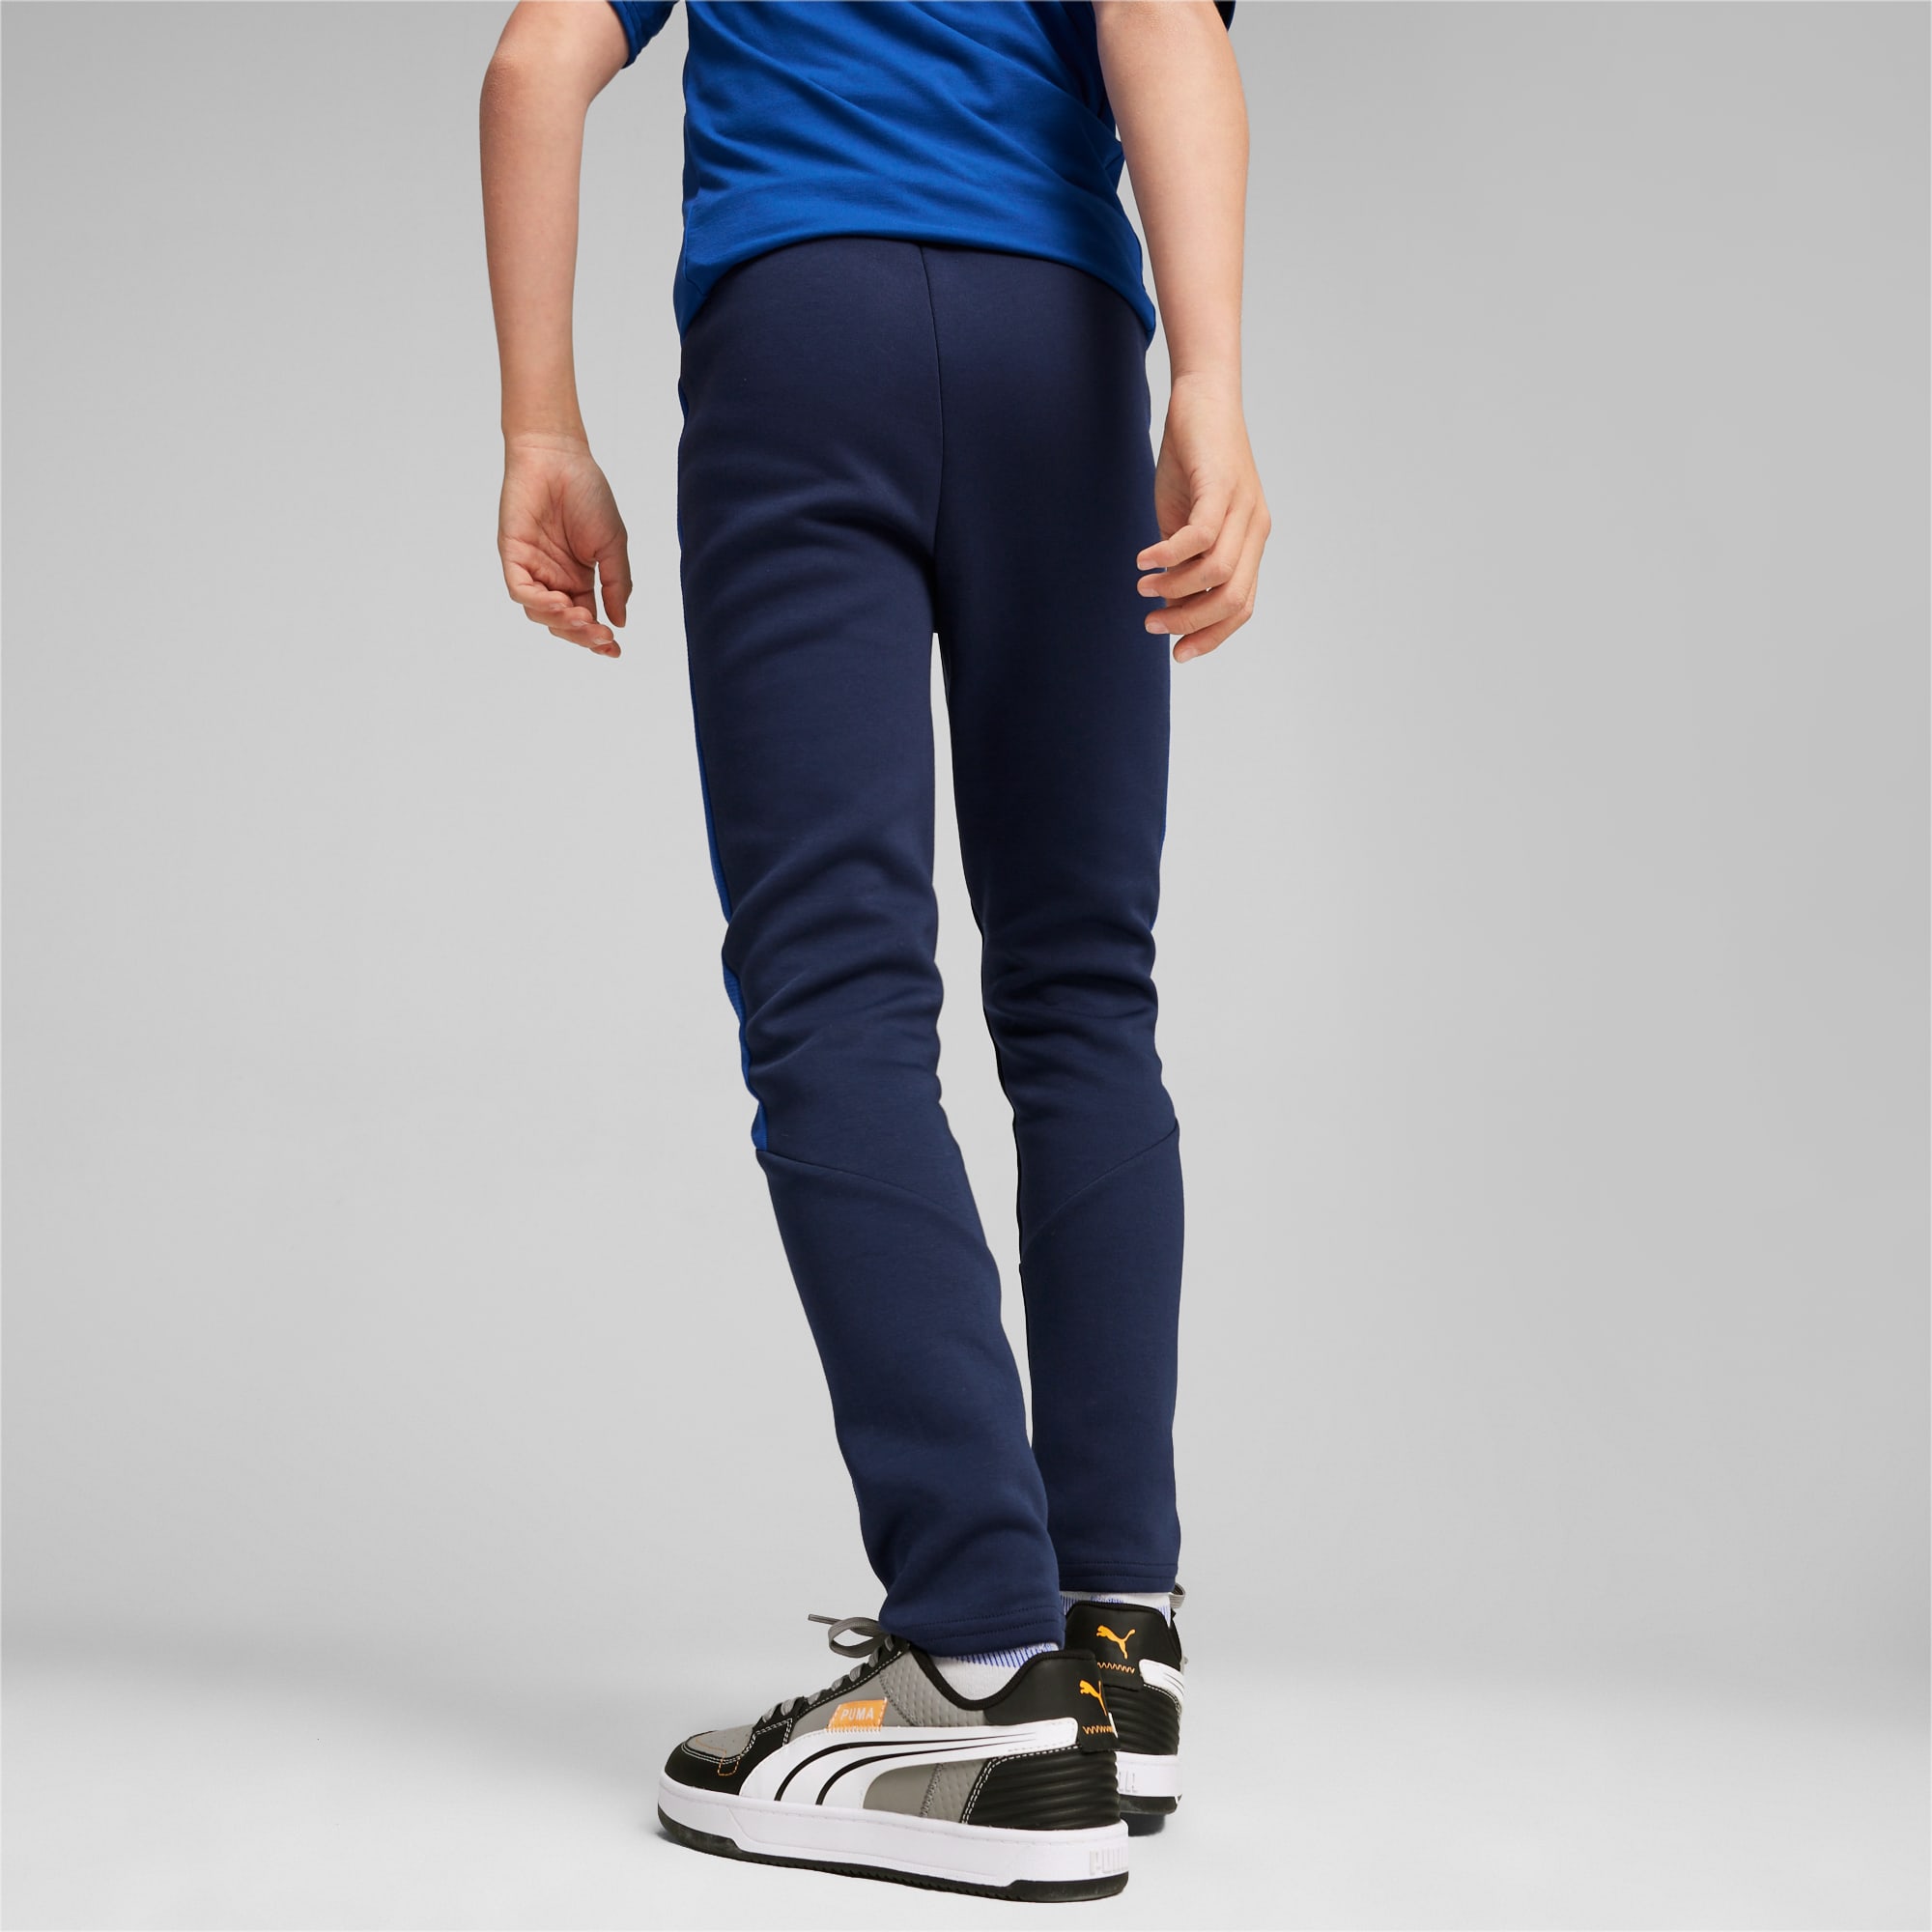 PUMA Evostripe Youth Sweatpants, Dark Blue, Size 116, Clothing